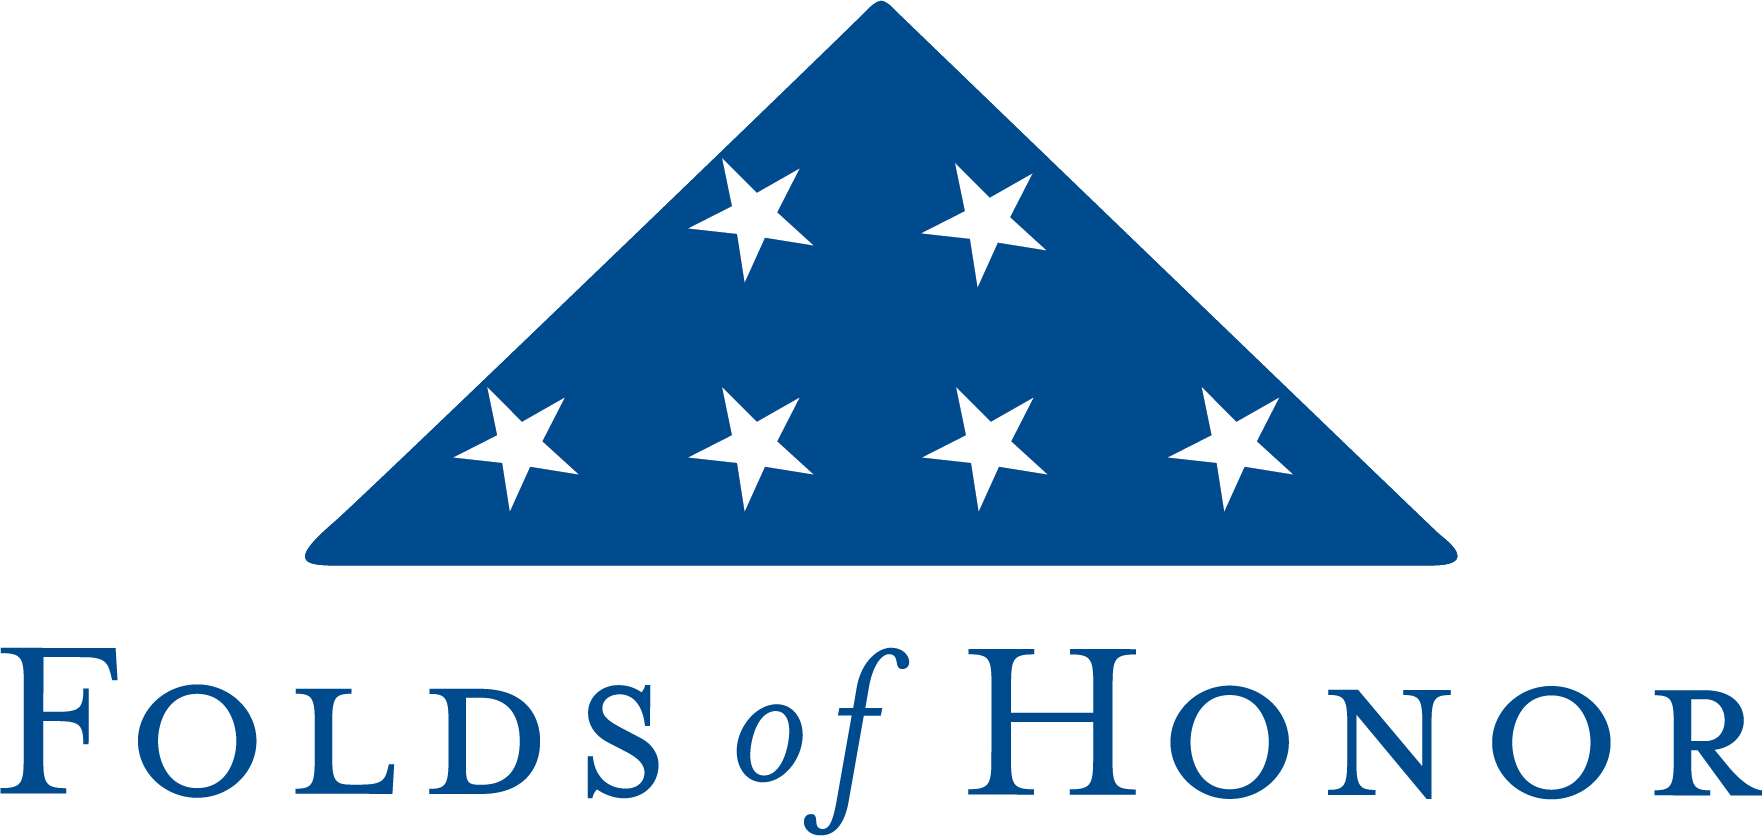 591 Kb - Folds Of Honor (1762x836)